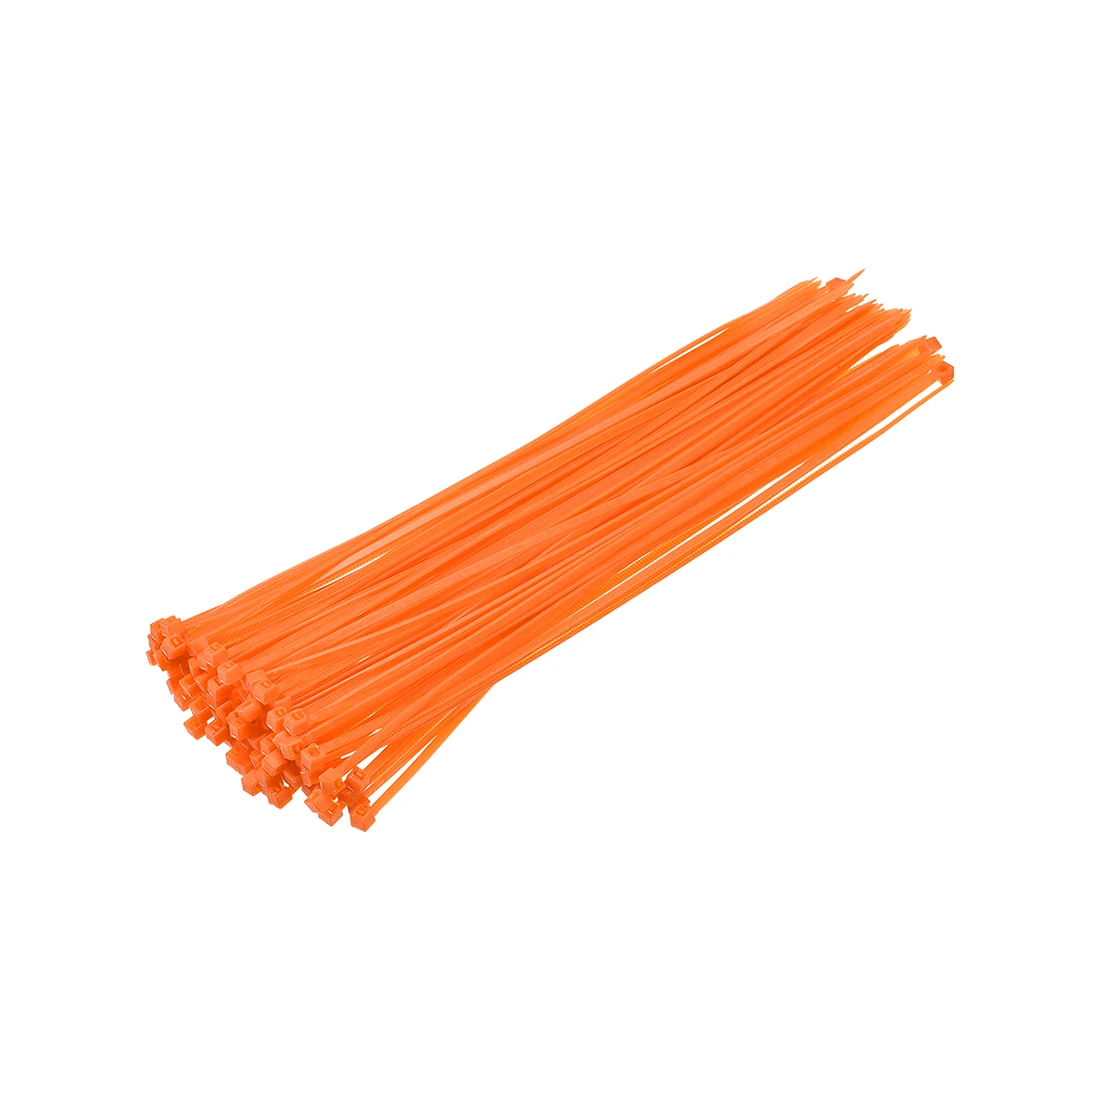 uxcell 200pcs Cable Zip Ties 200mmx2.5mm Self-Locking Nylon Tie Wraps Orange Single-use Locking Flexible Cable Tie